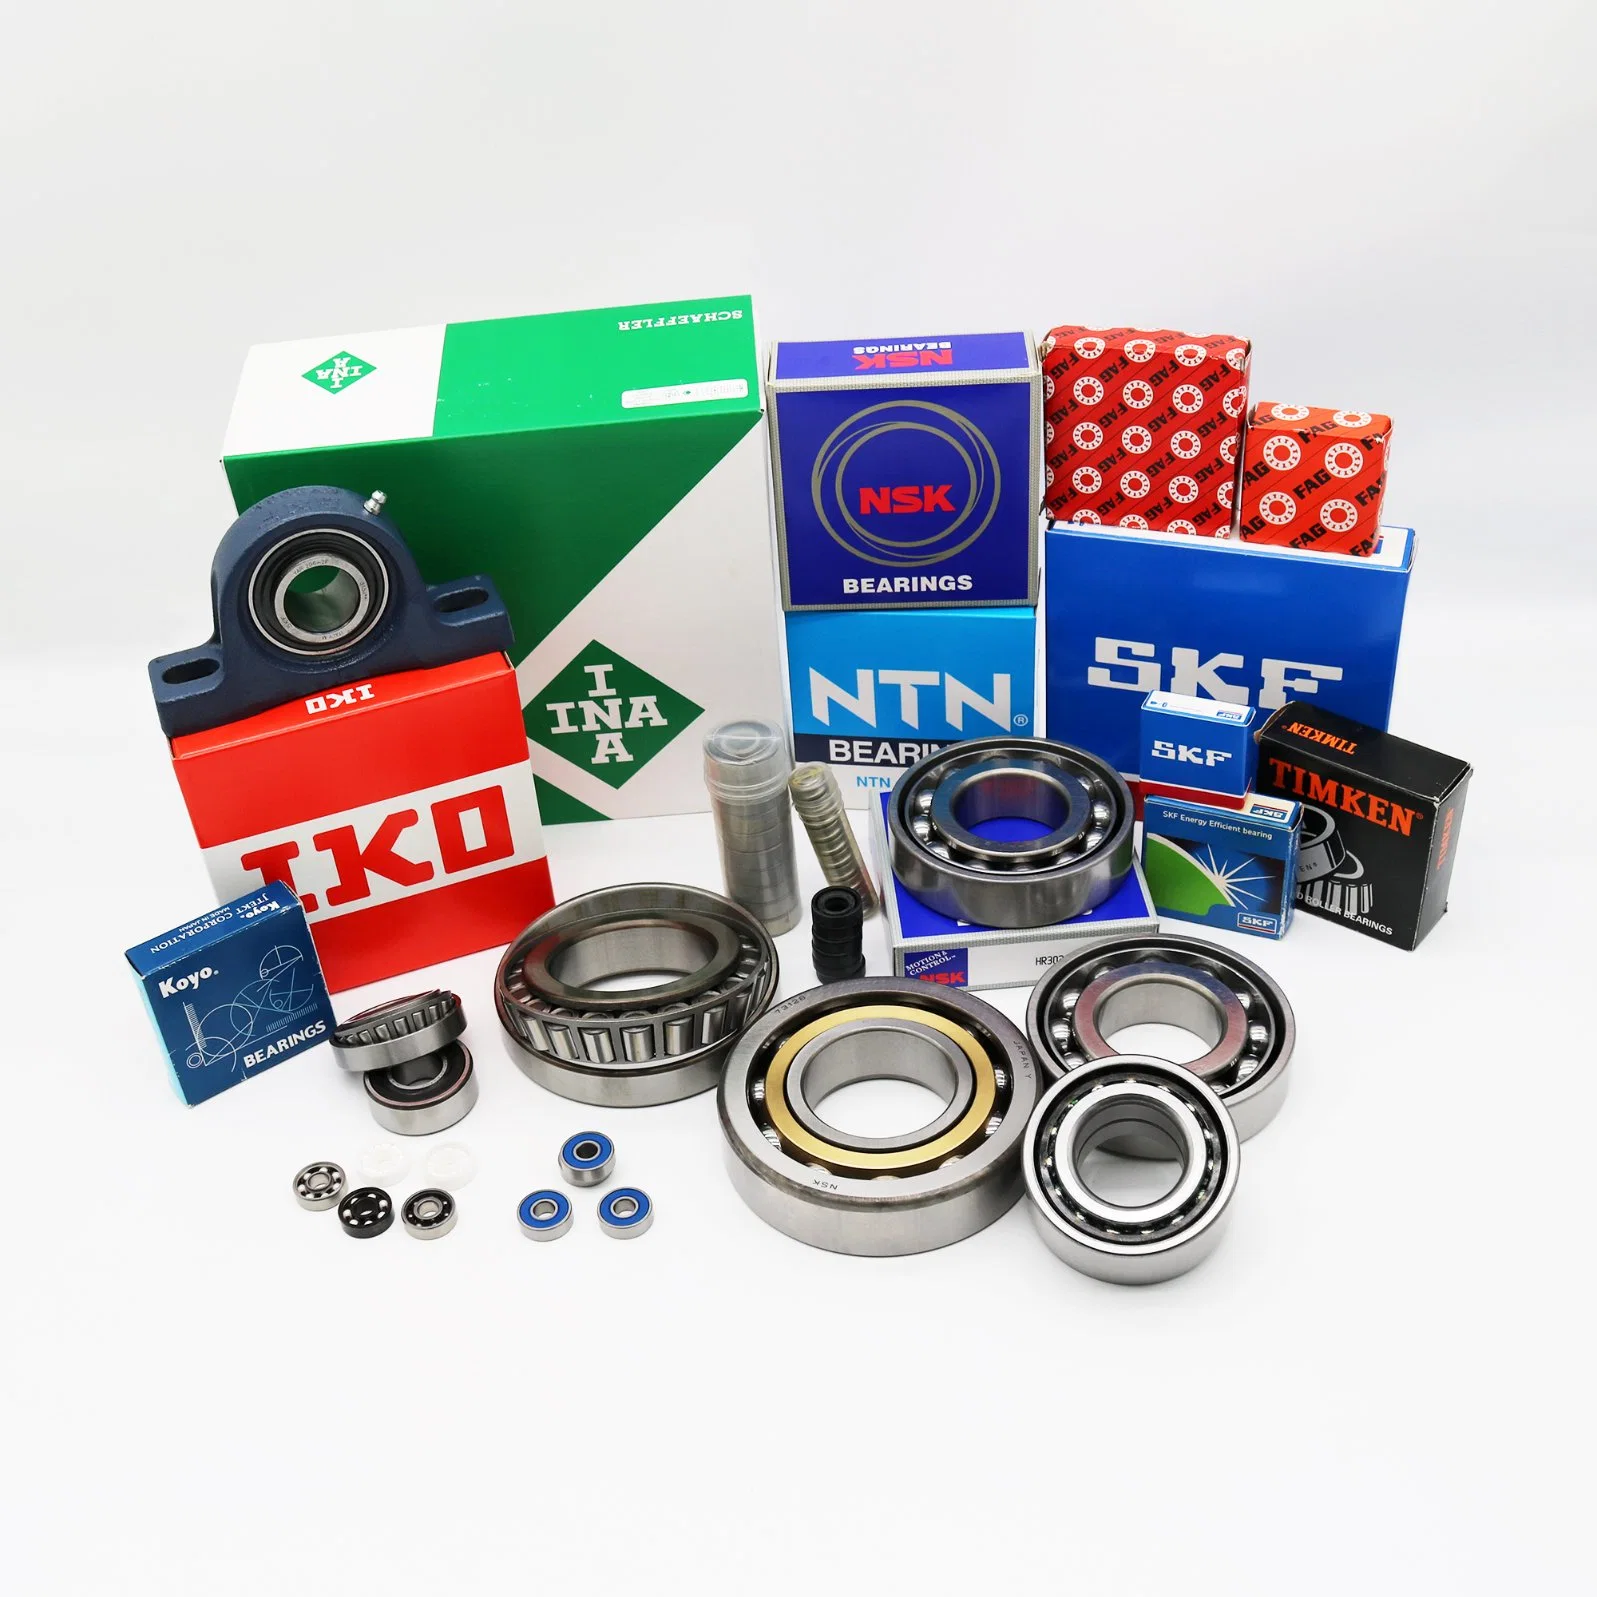 Wj662 Distributor/Manufacturer OEM Auto Wheel Hub Bearing, Motorcycle Parts, Auto Parts, Insert Bearings, Car Accessories Bearing Price Ball Bearing, Roller Bea